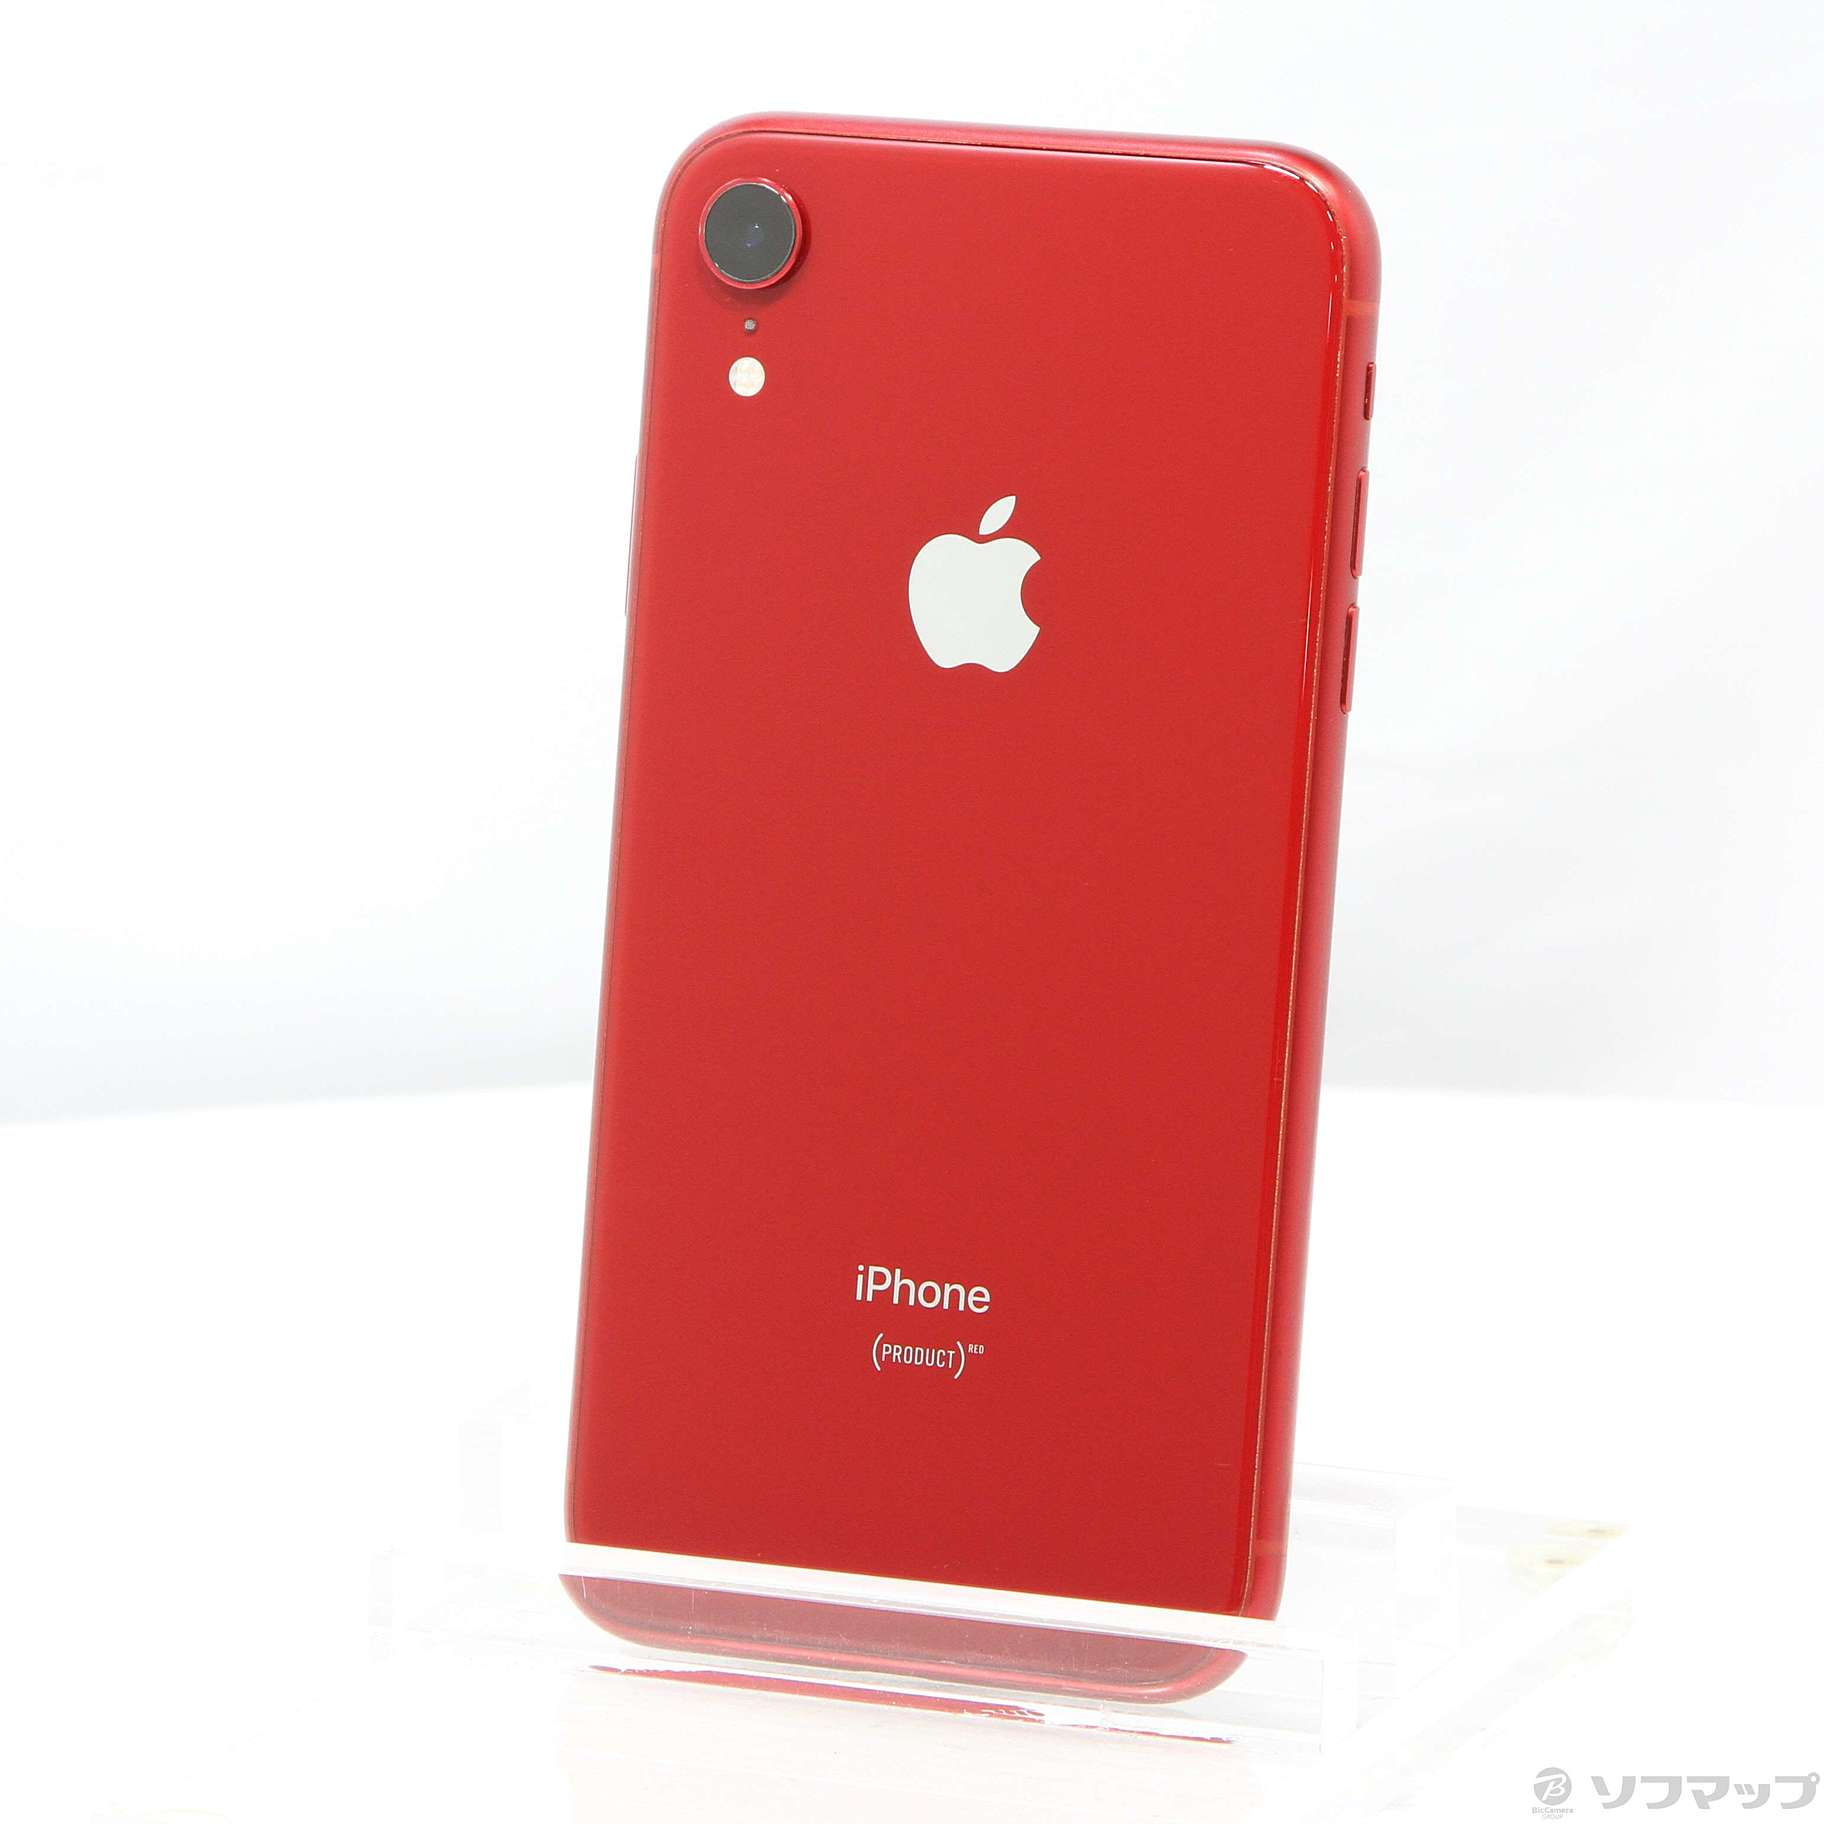 iPhone XR SIMフリー PRODUCT RED - スマートフォン本体